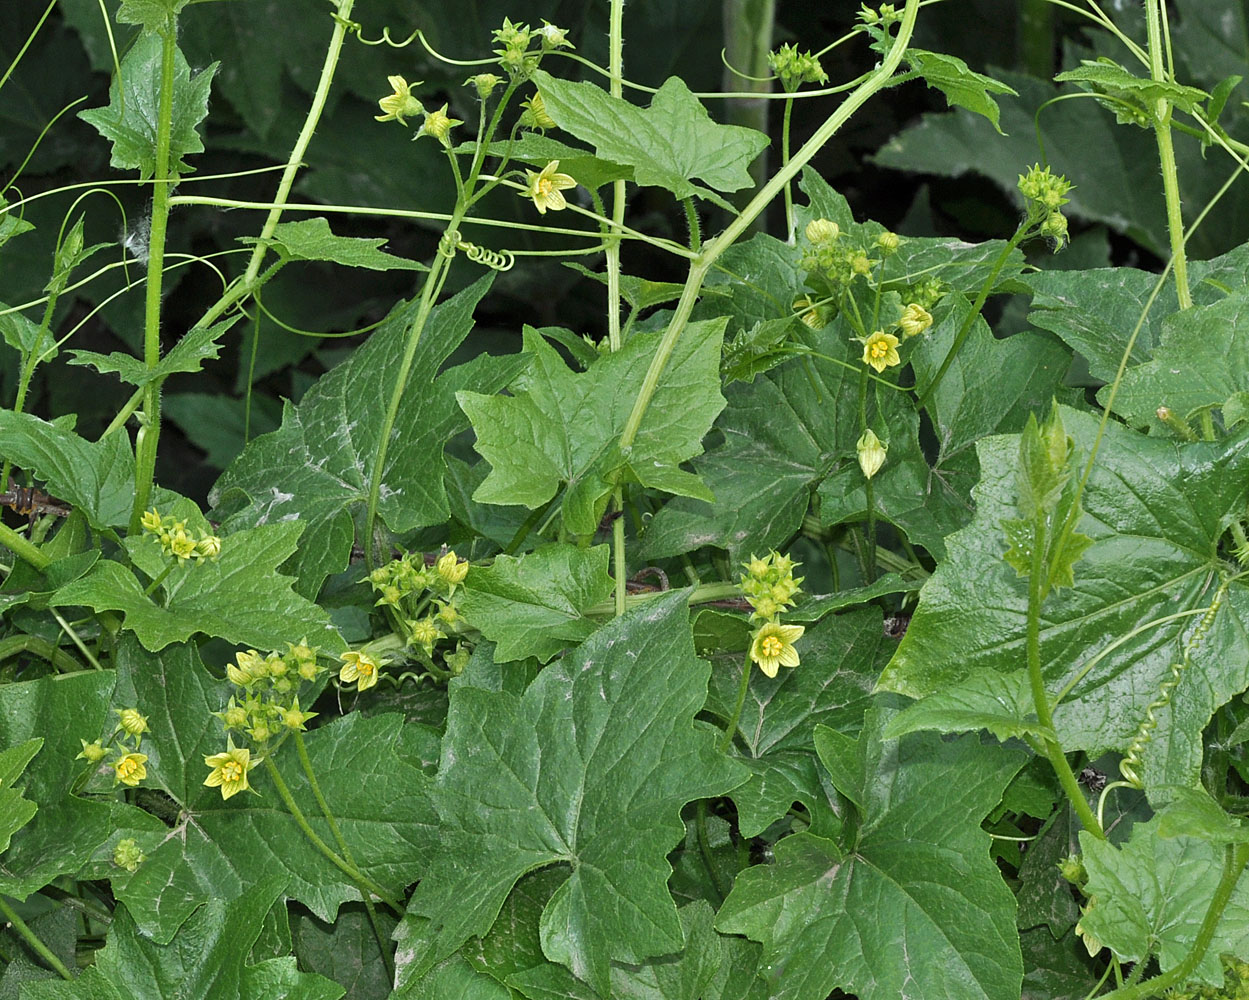 Flora of Eastern Washington Image: Bryonia alba